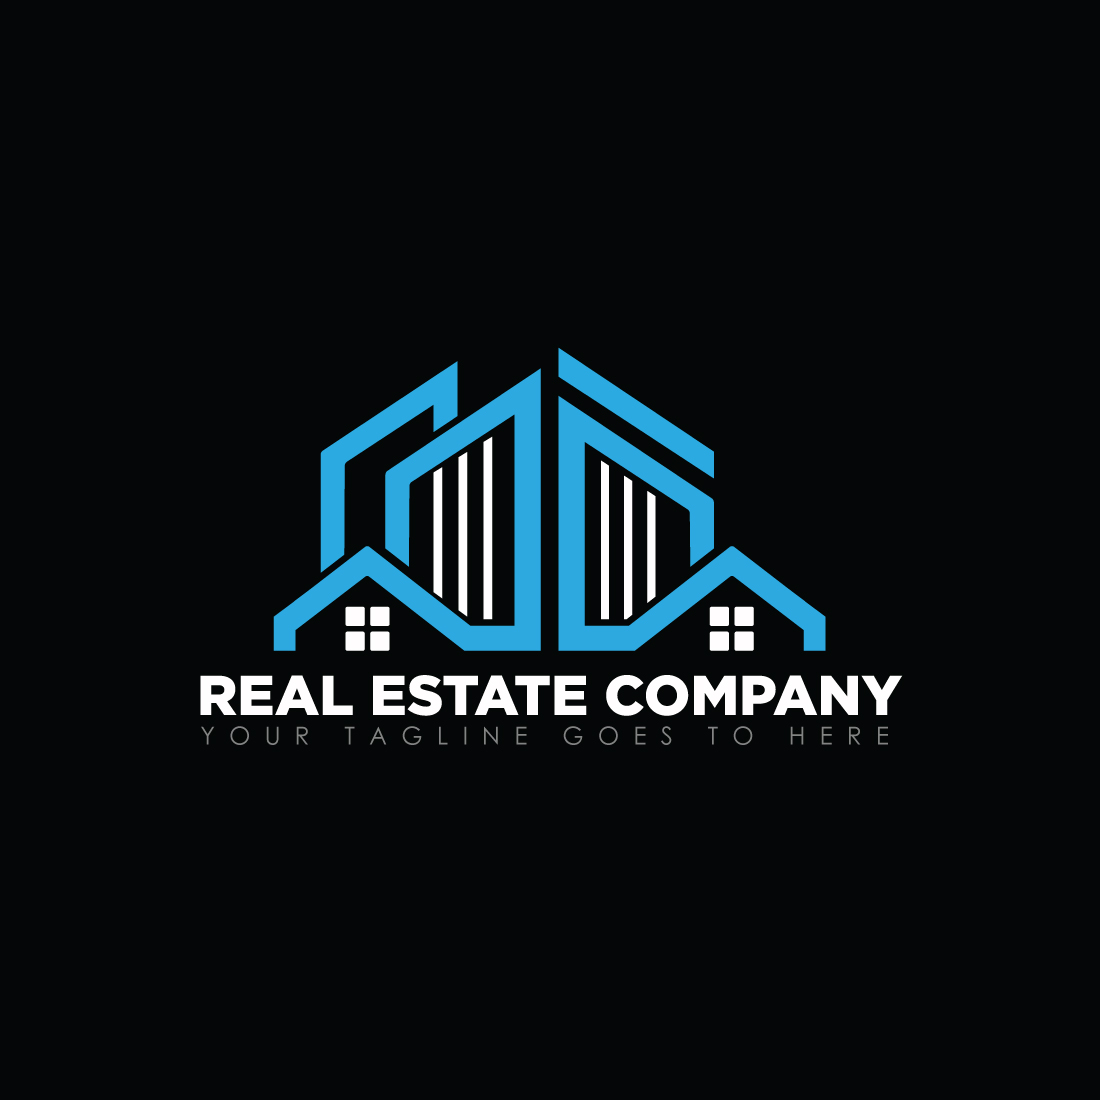 Real Estate company logo design preview image.